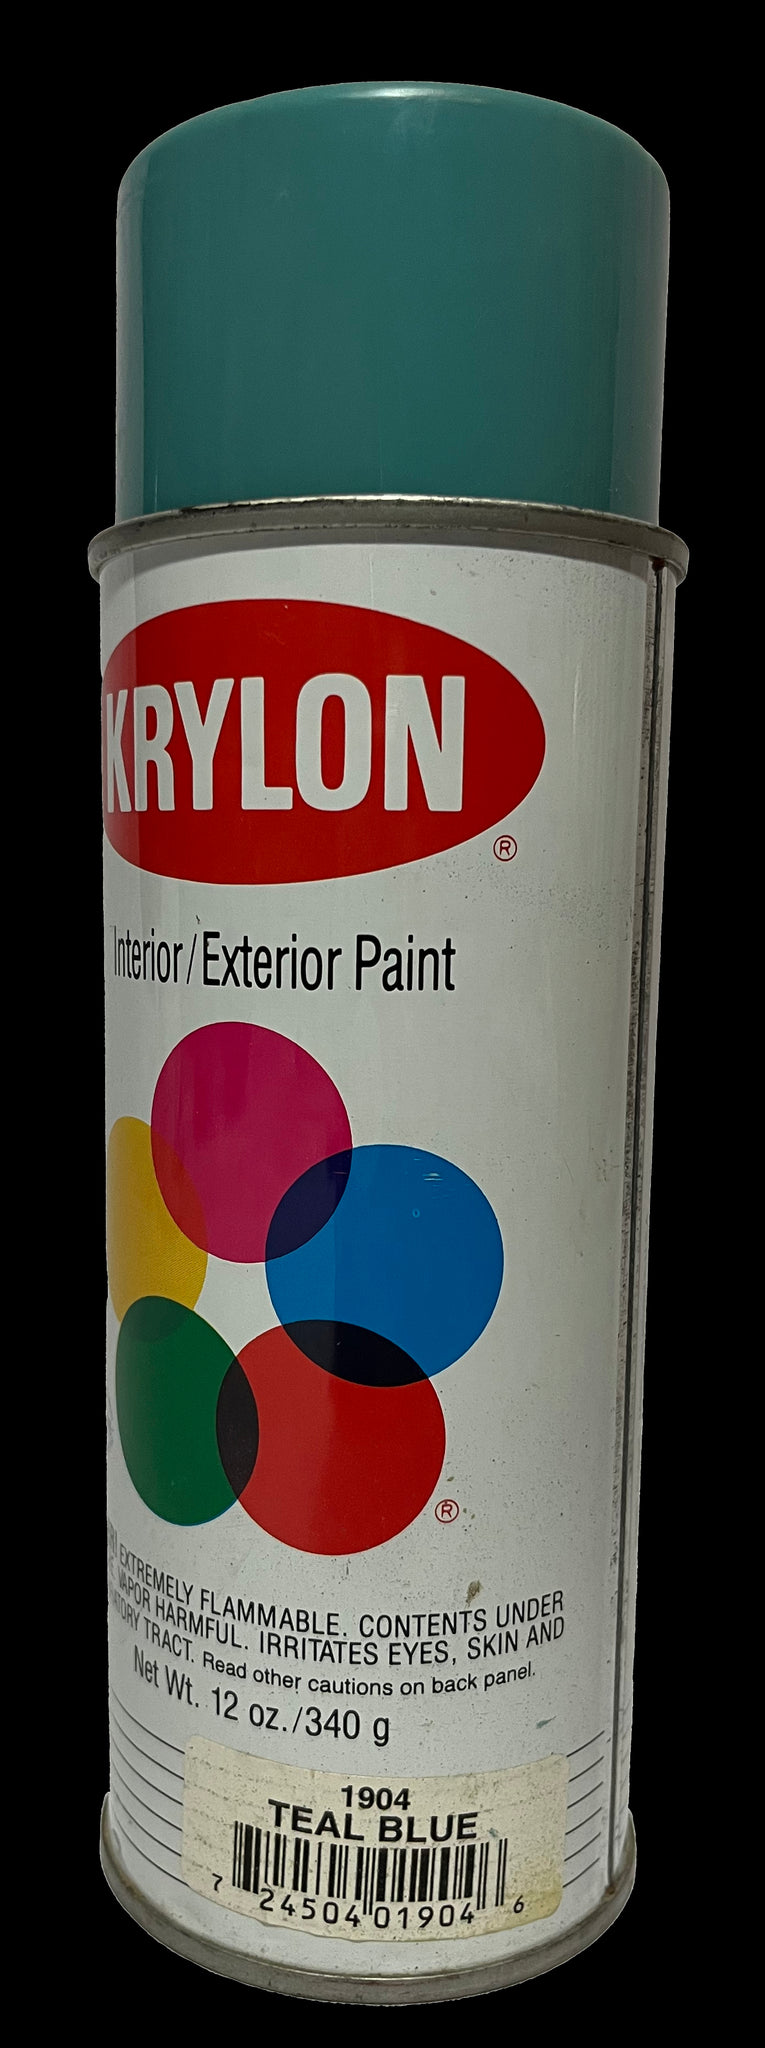 Vintage Krylon spray paint Crystal Clear 5 Ball Label Old Valve 1970s 1960s